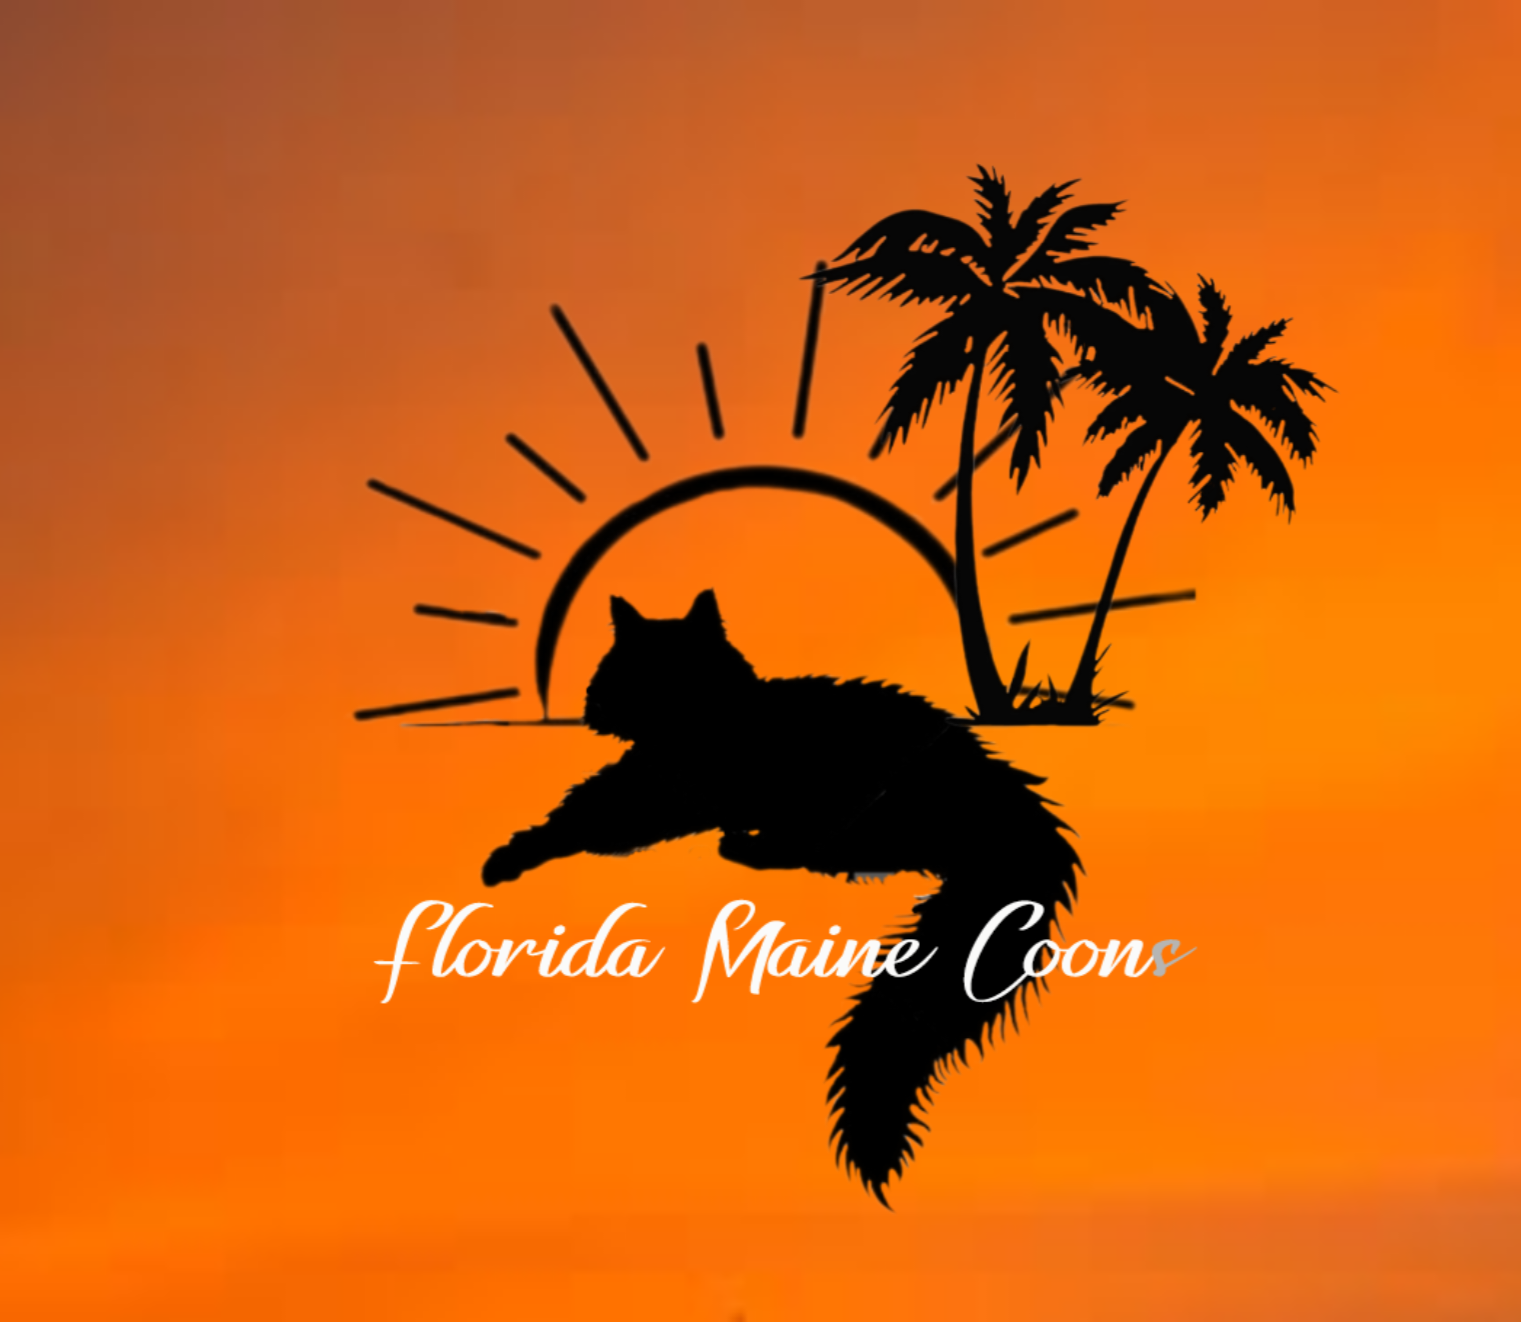 Florida Maine Coons logo